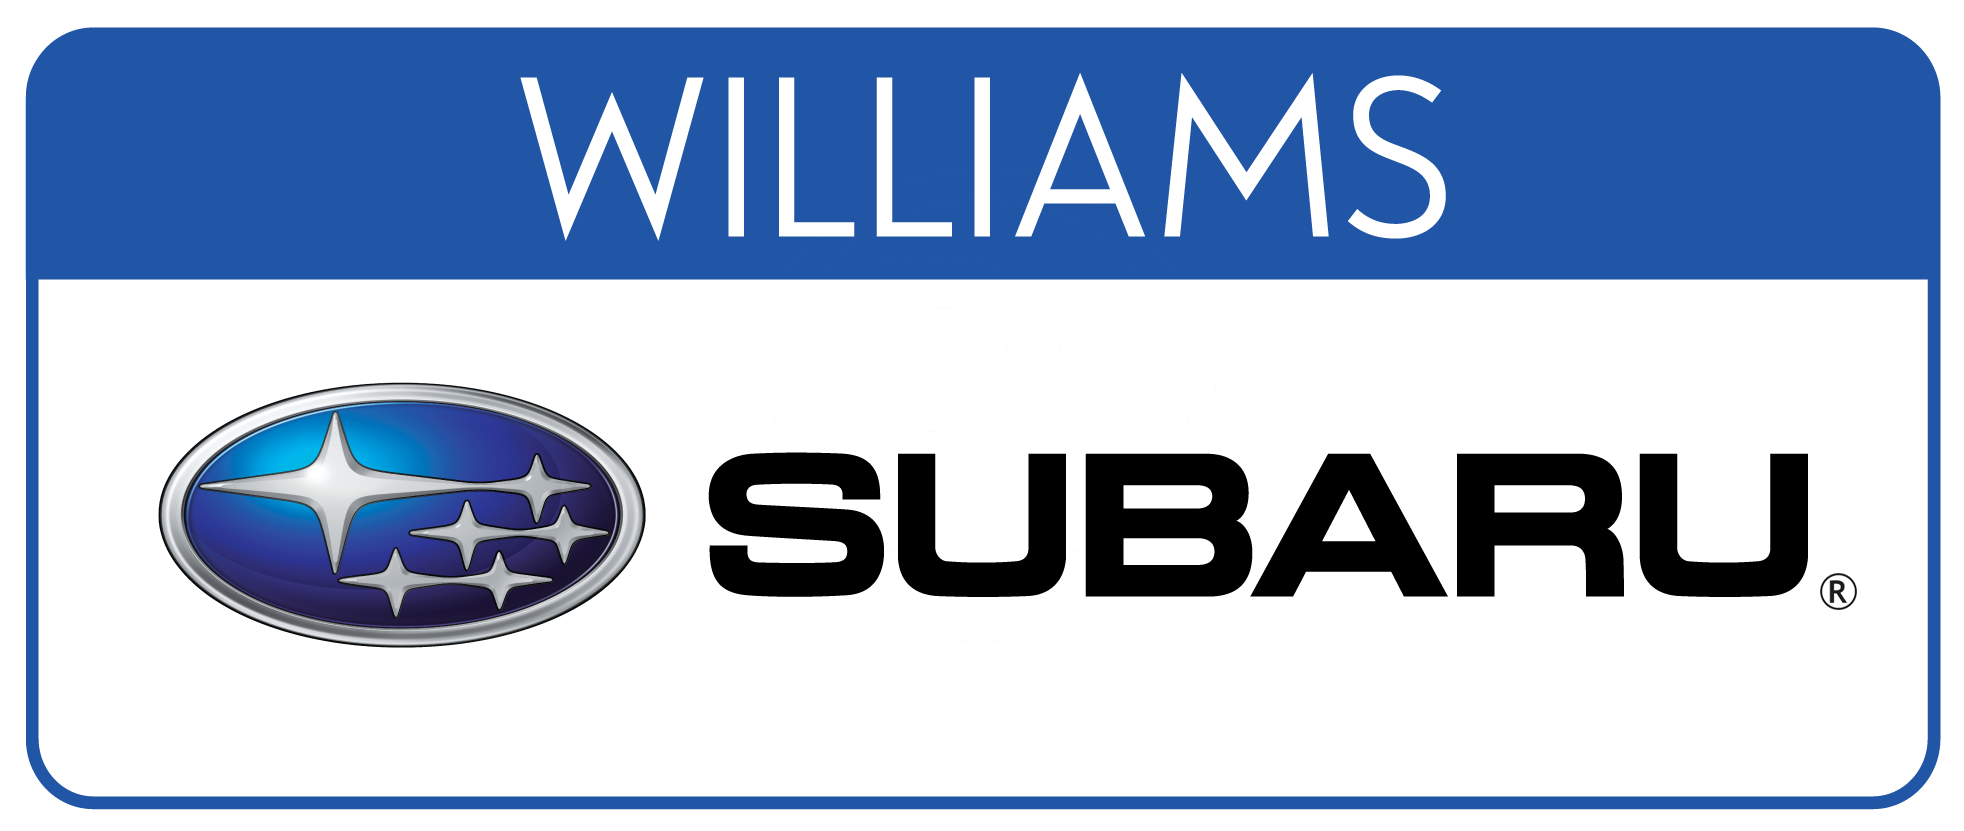 Williams_Subaru R